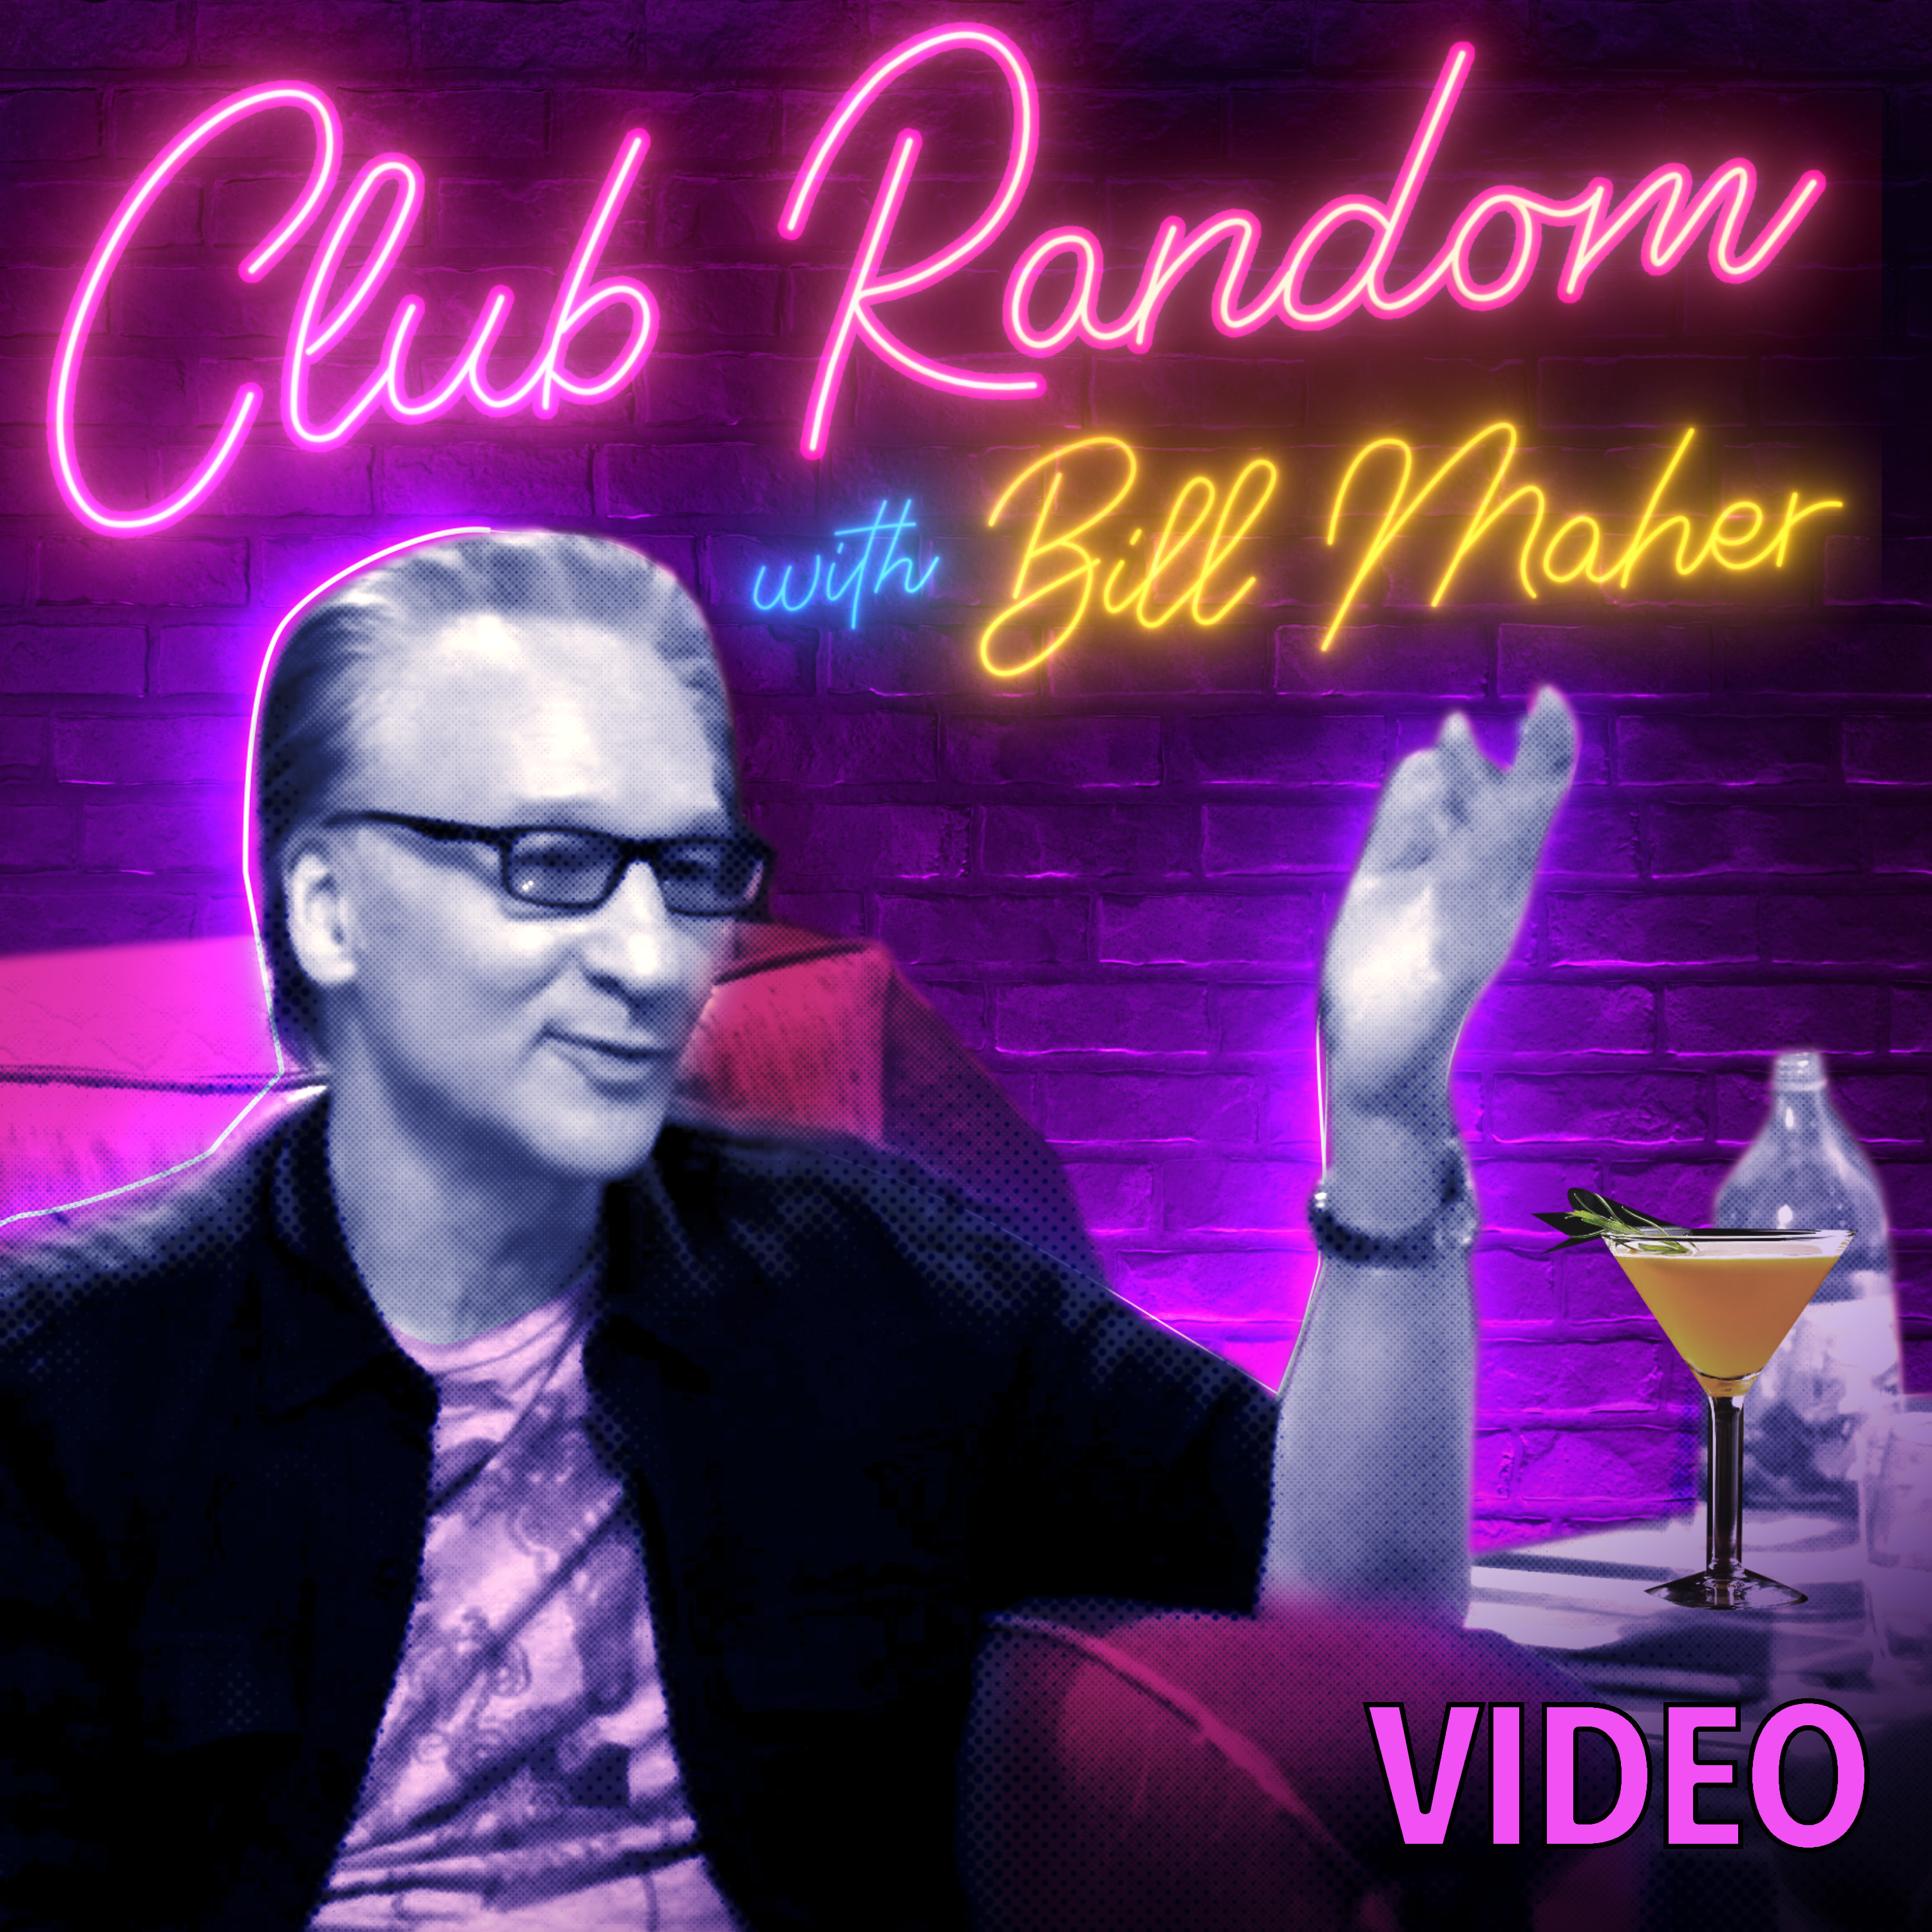 Video: Sean Penn | Club Random with Bill Maher